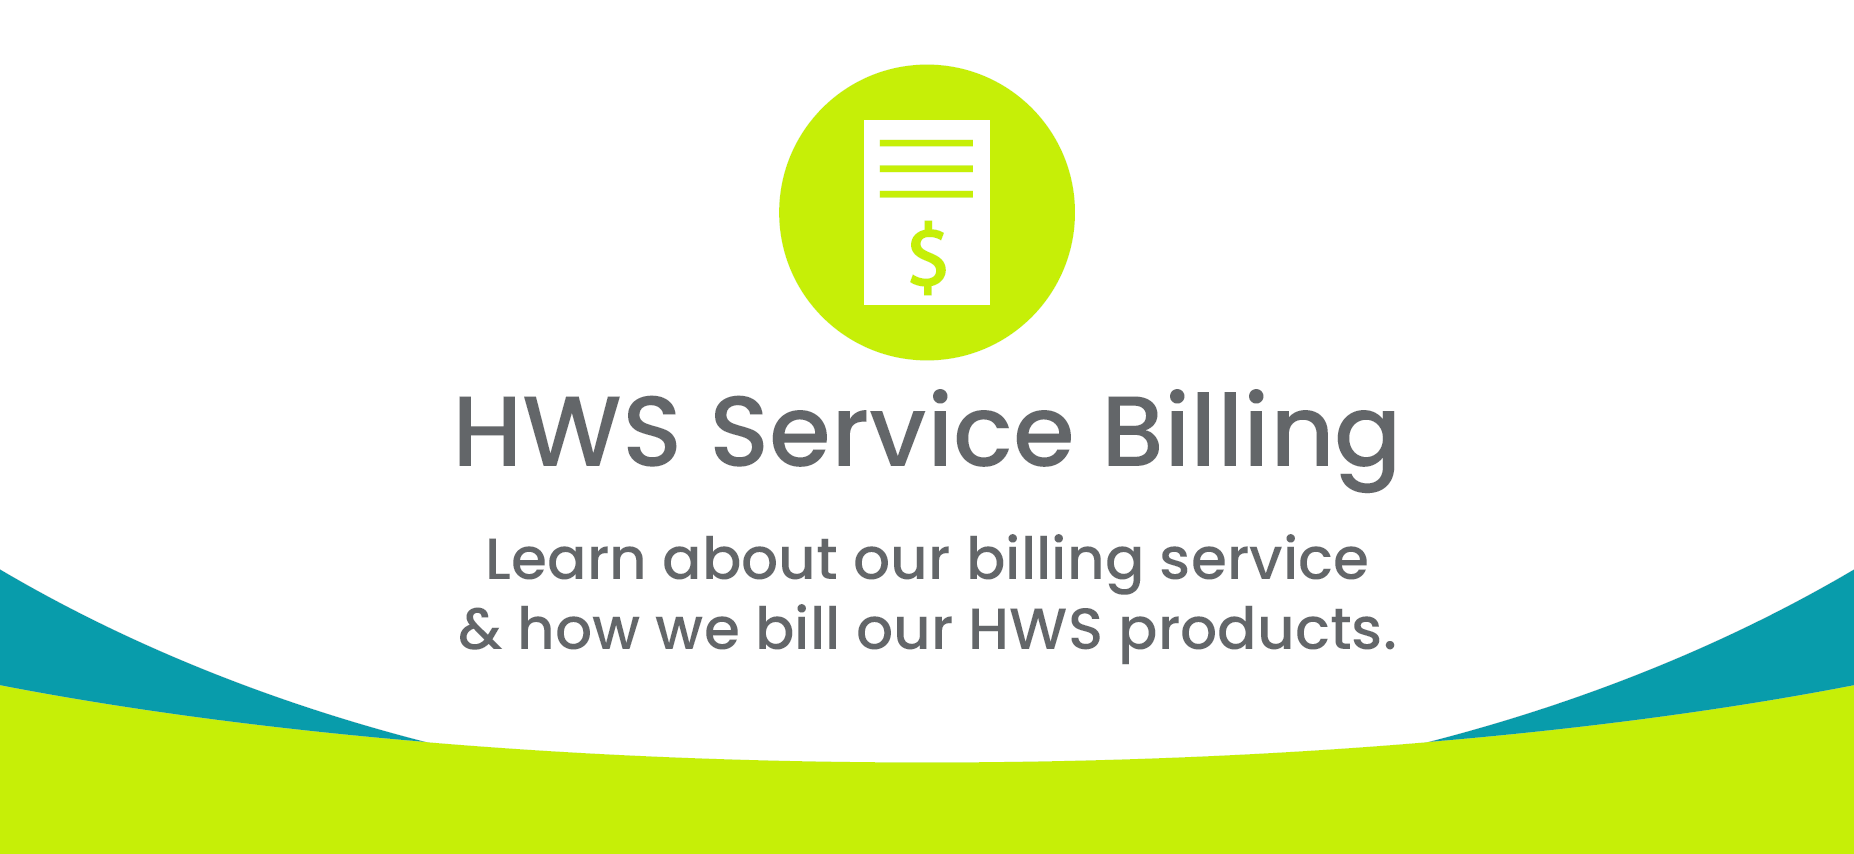 HWS Service Billing